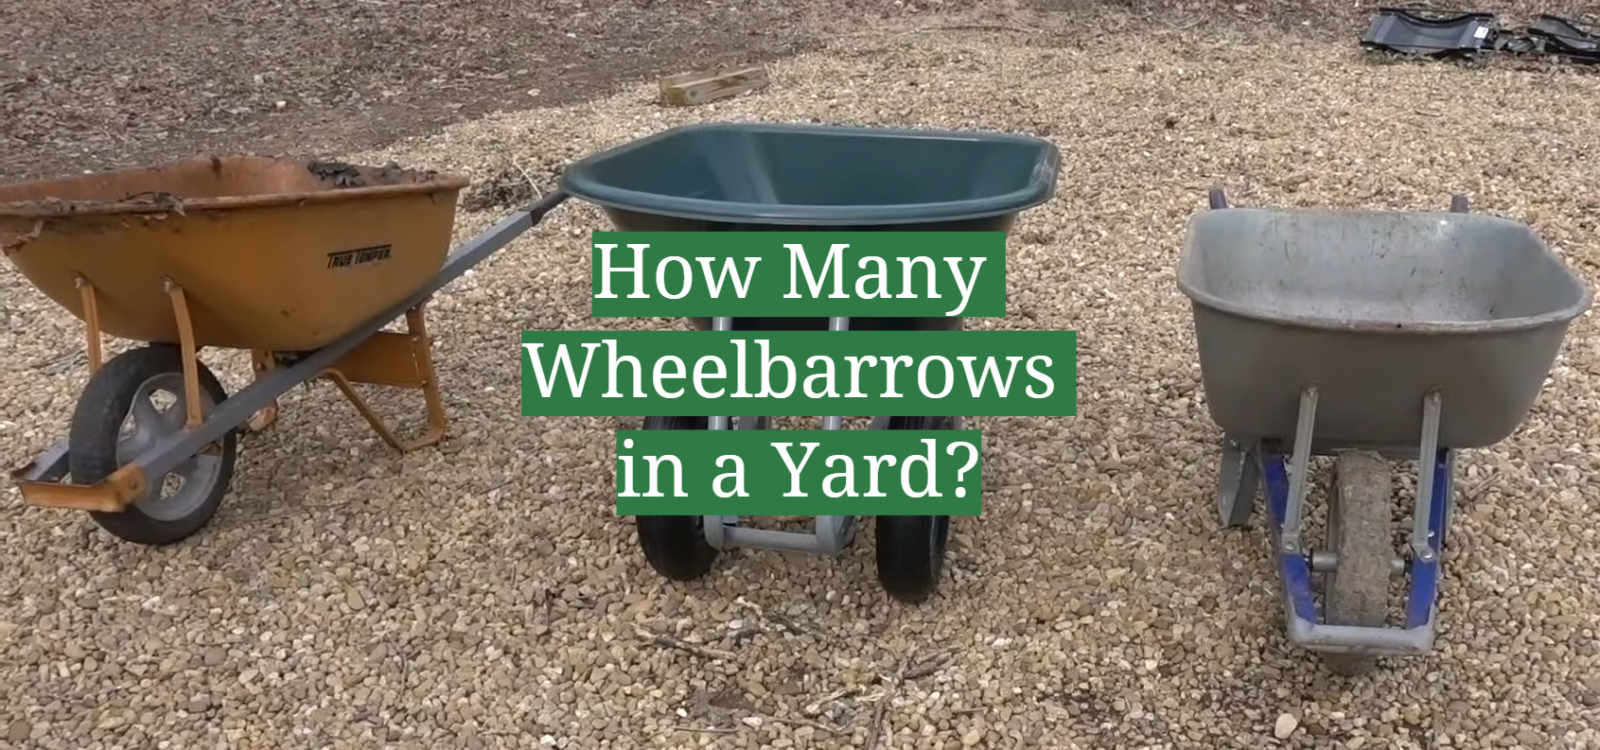 How Many Wheelbarrows in a Yard?